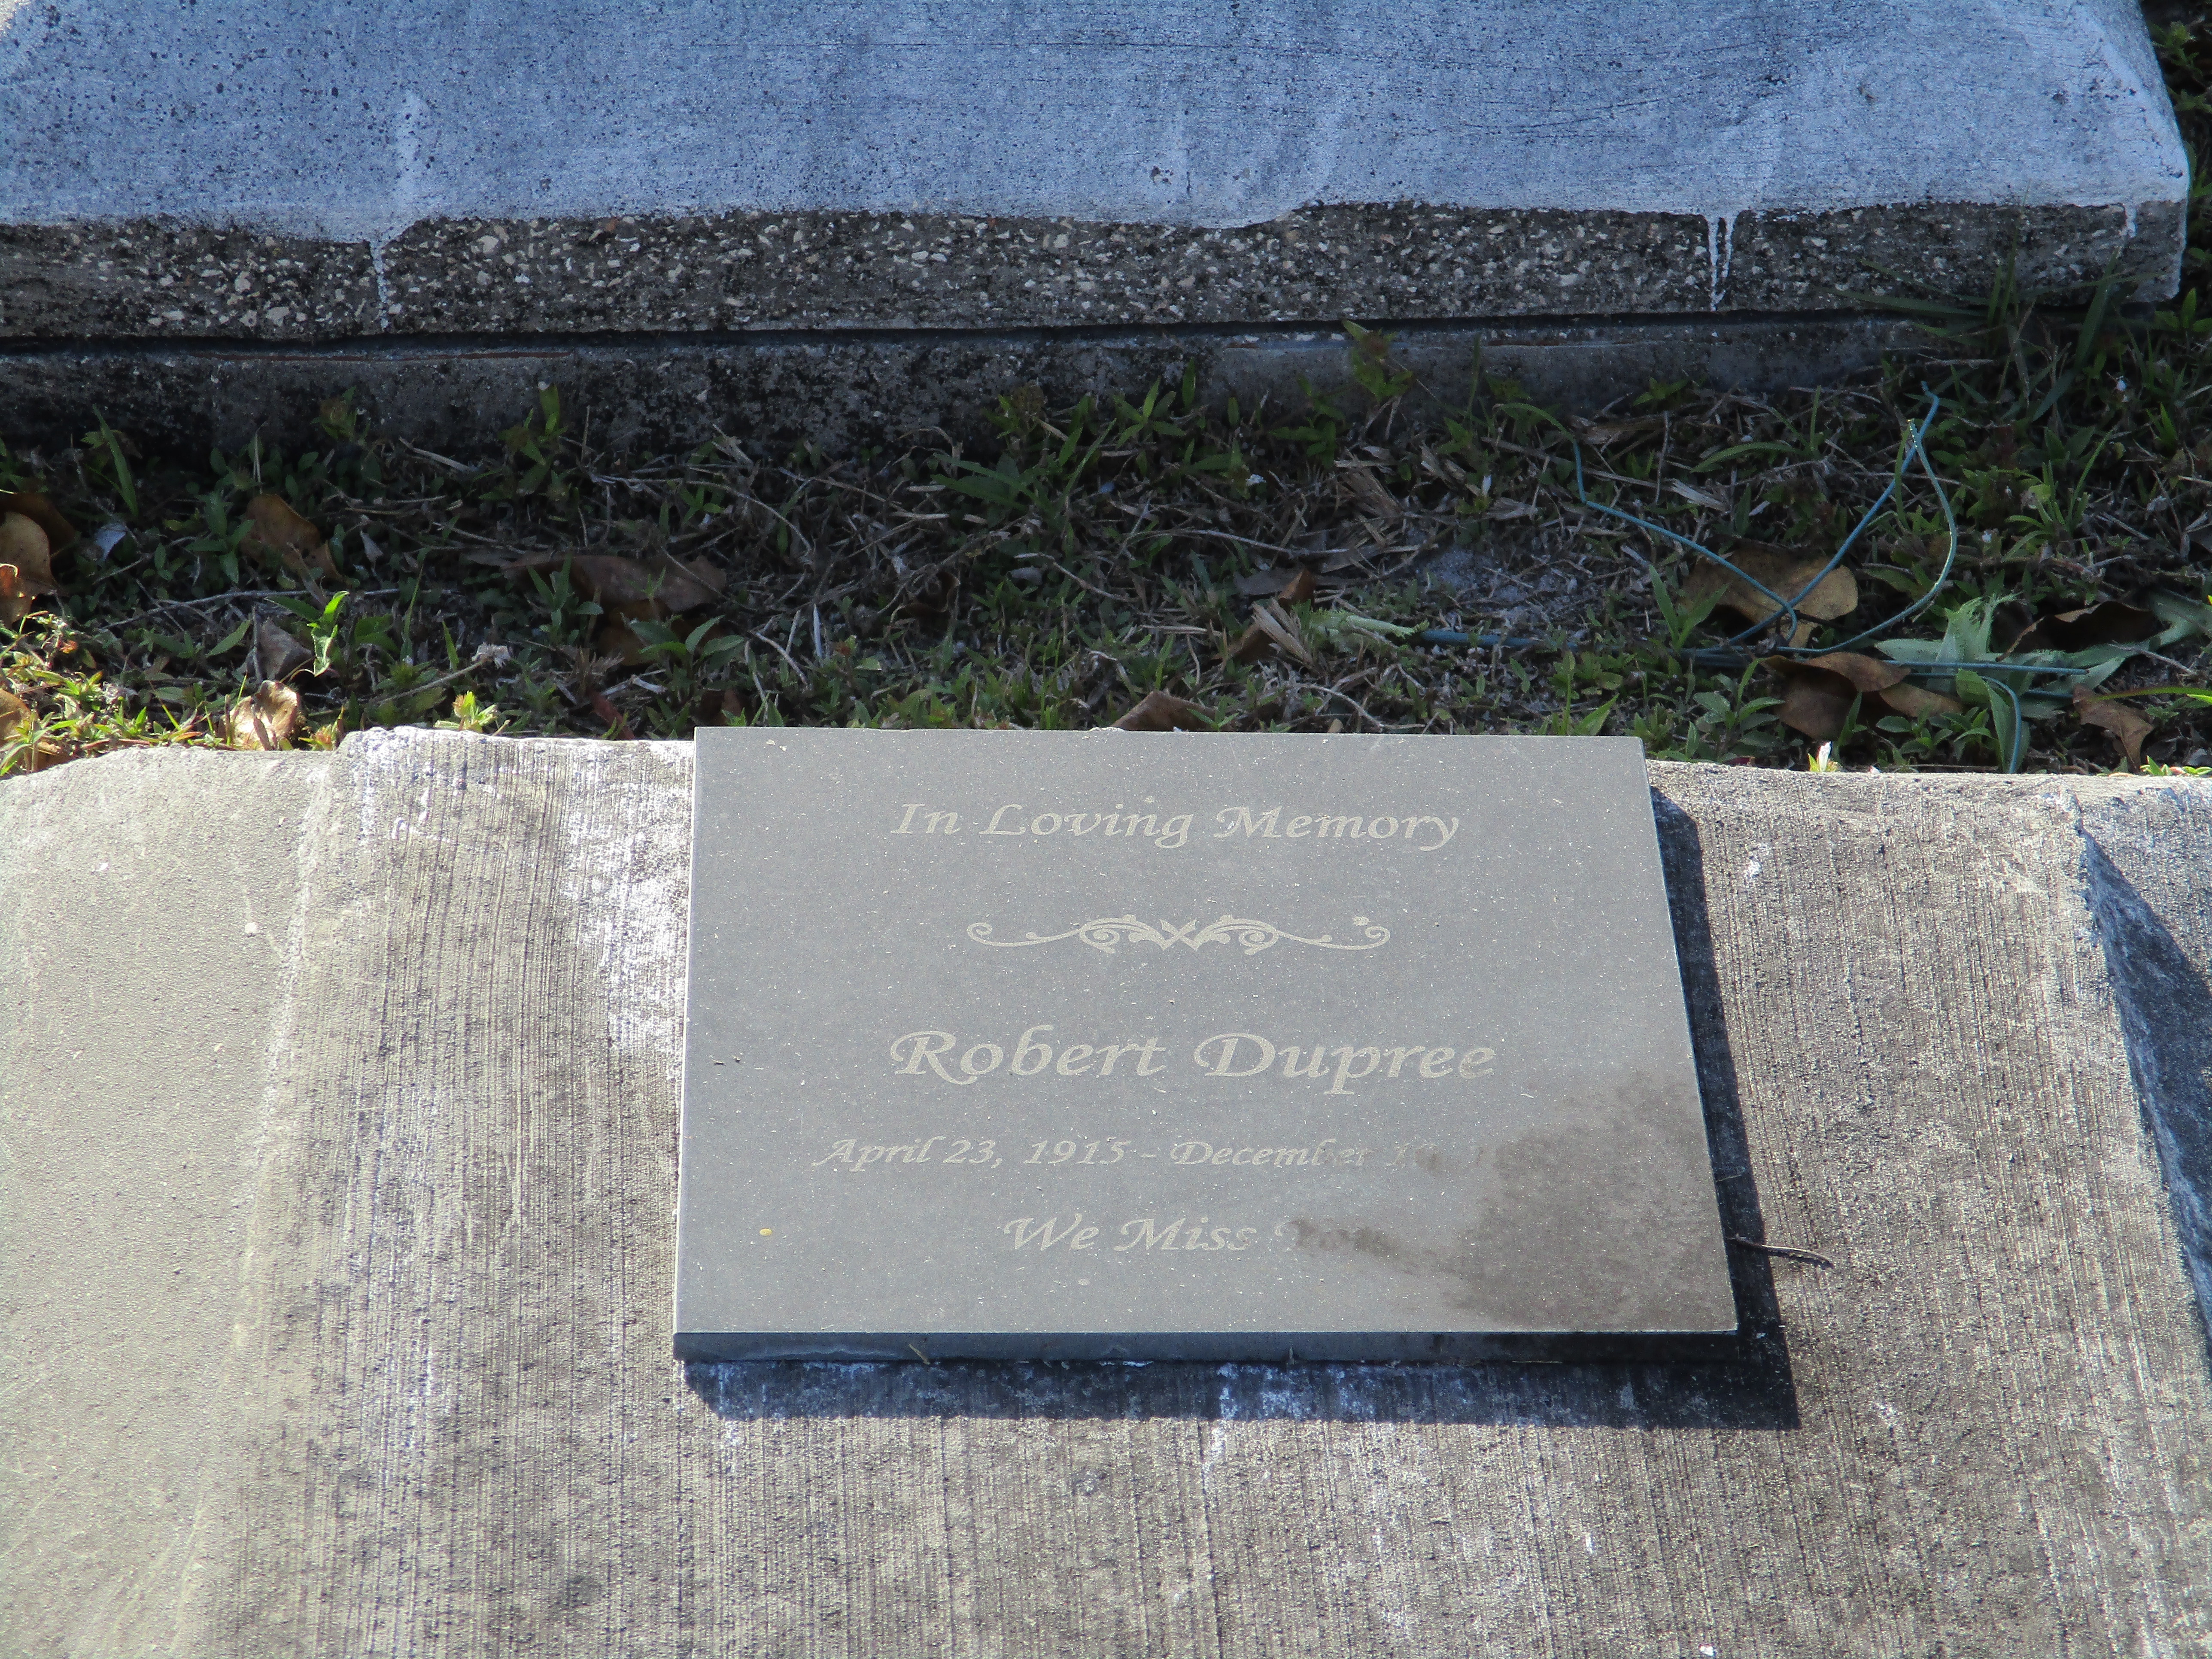 Robert Dupree